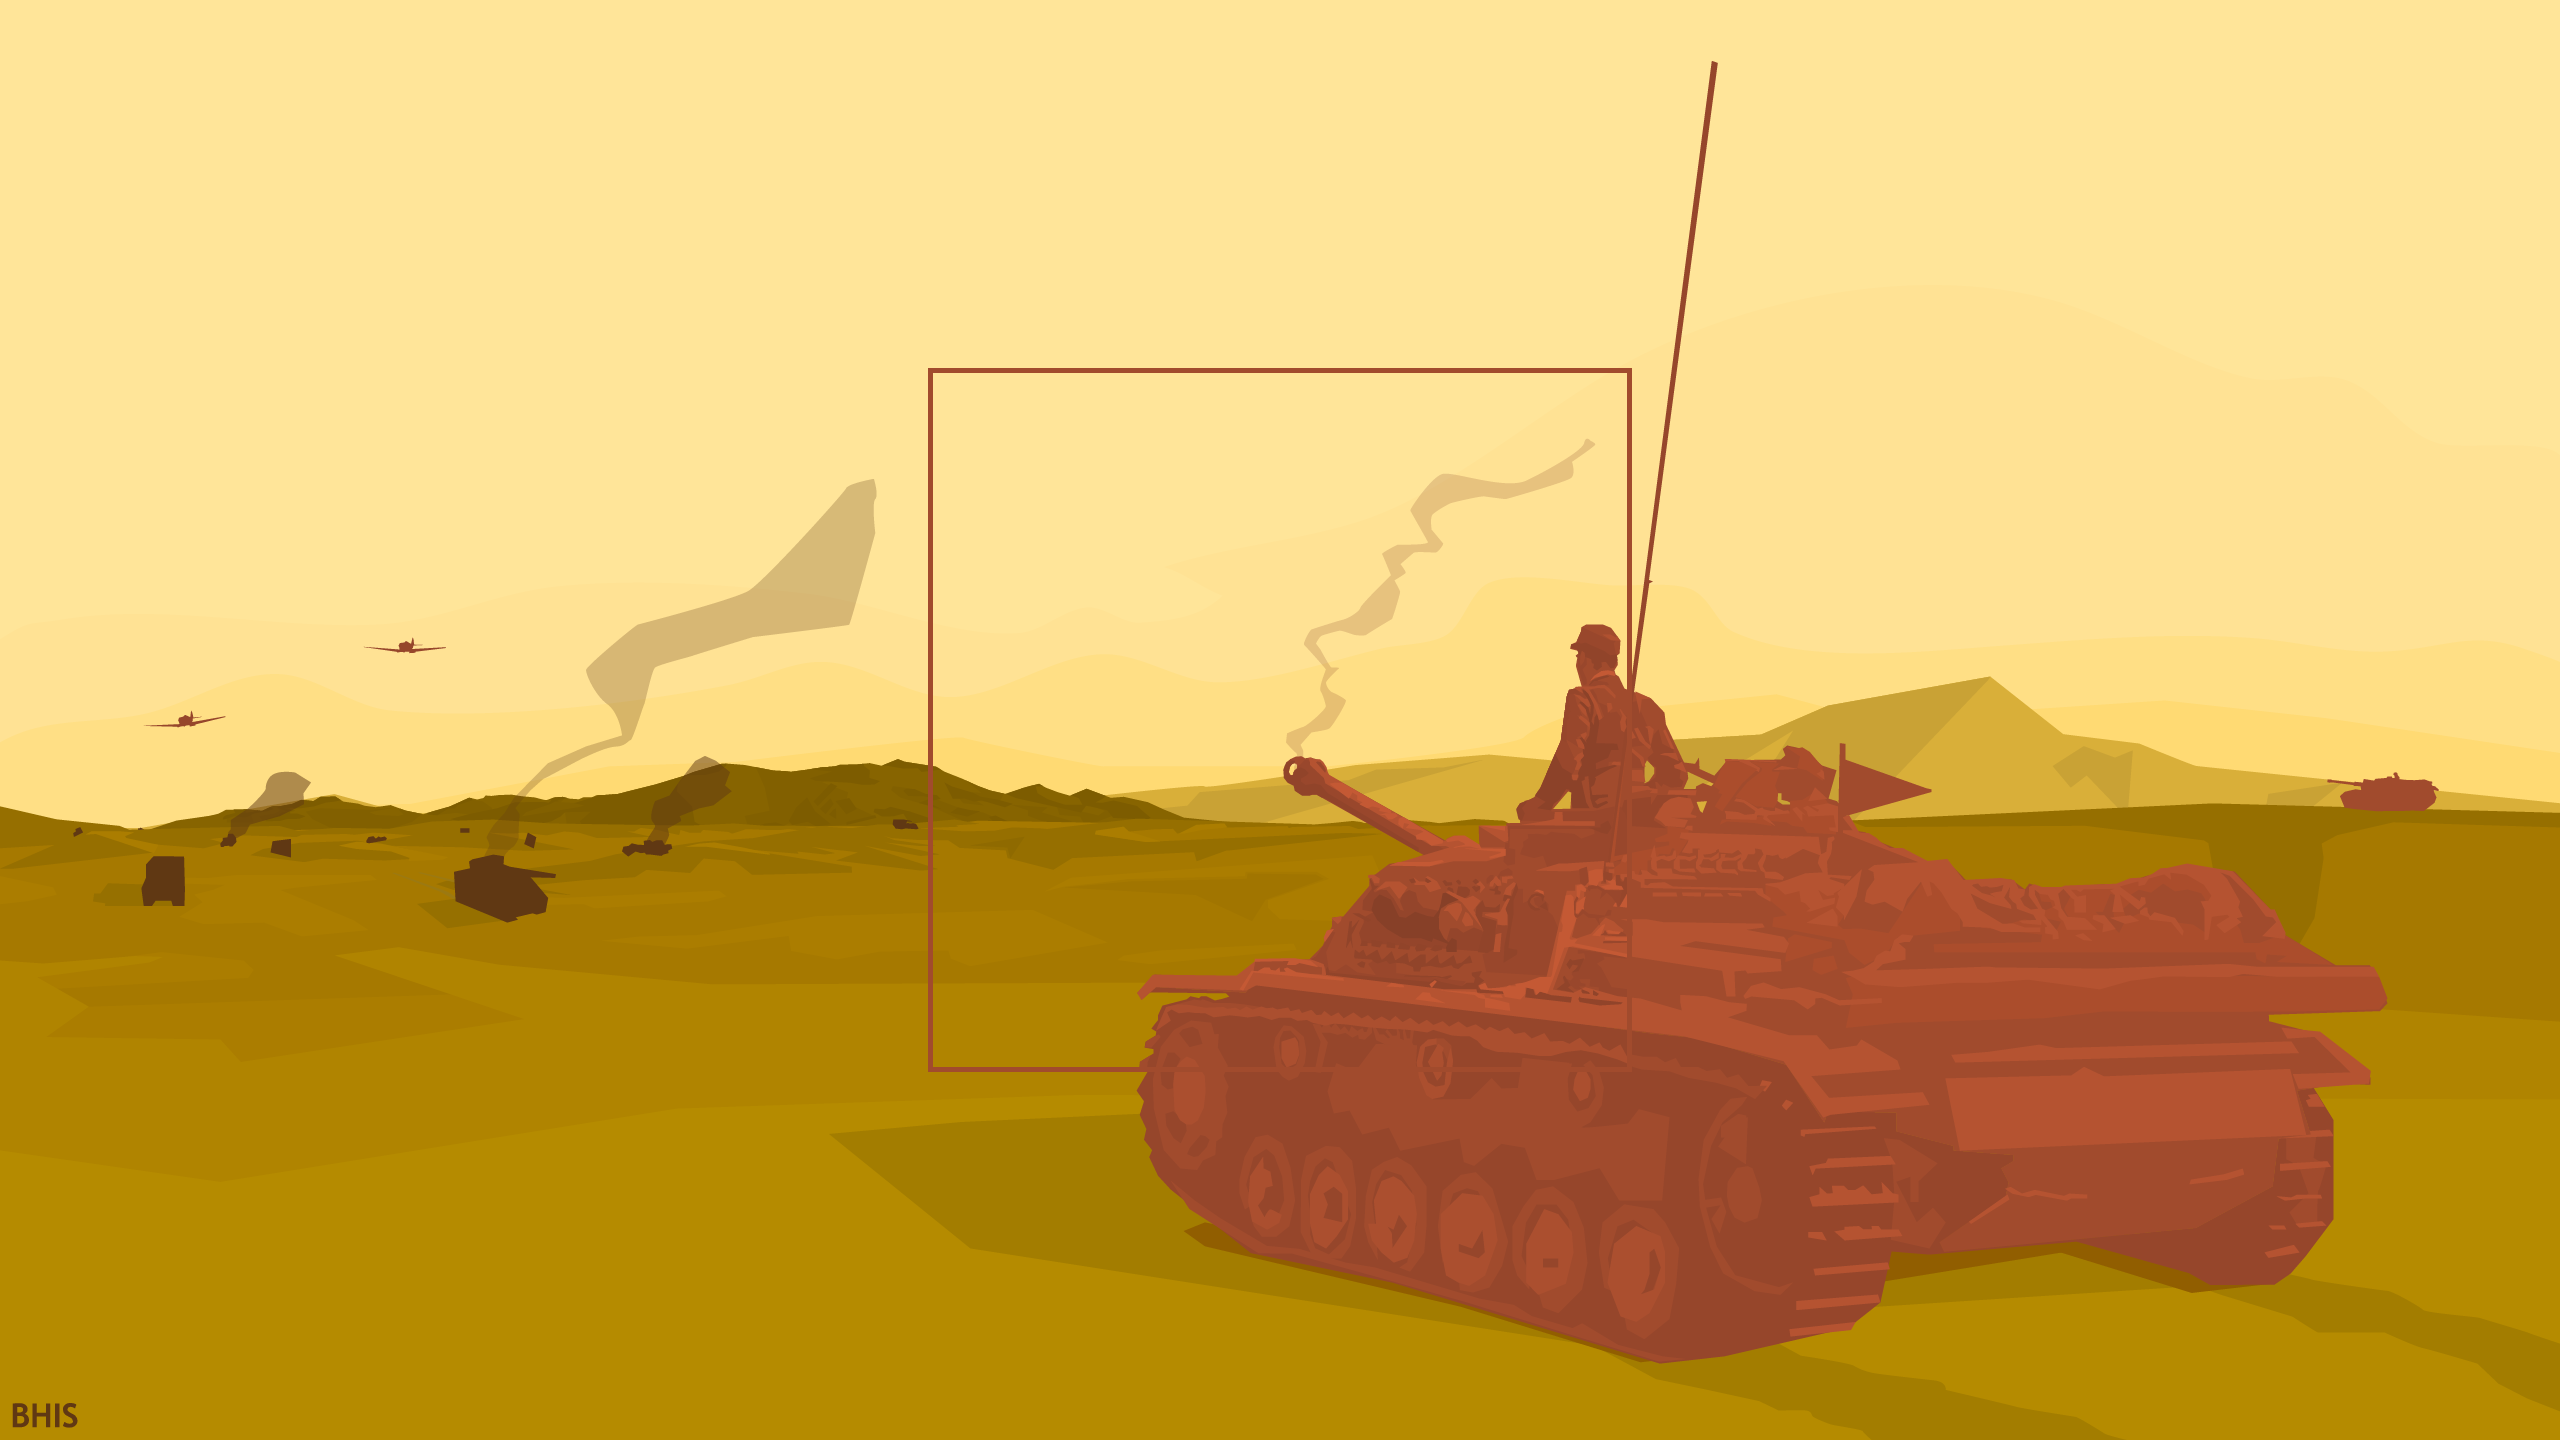 Minimalism Selective Coloring Tank War Yellow Brown Square Digital Art 2560x1440